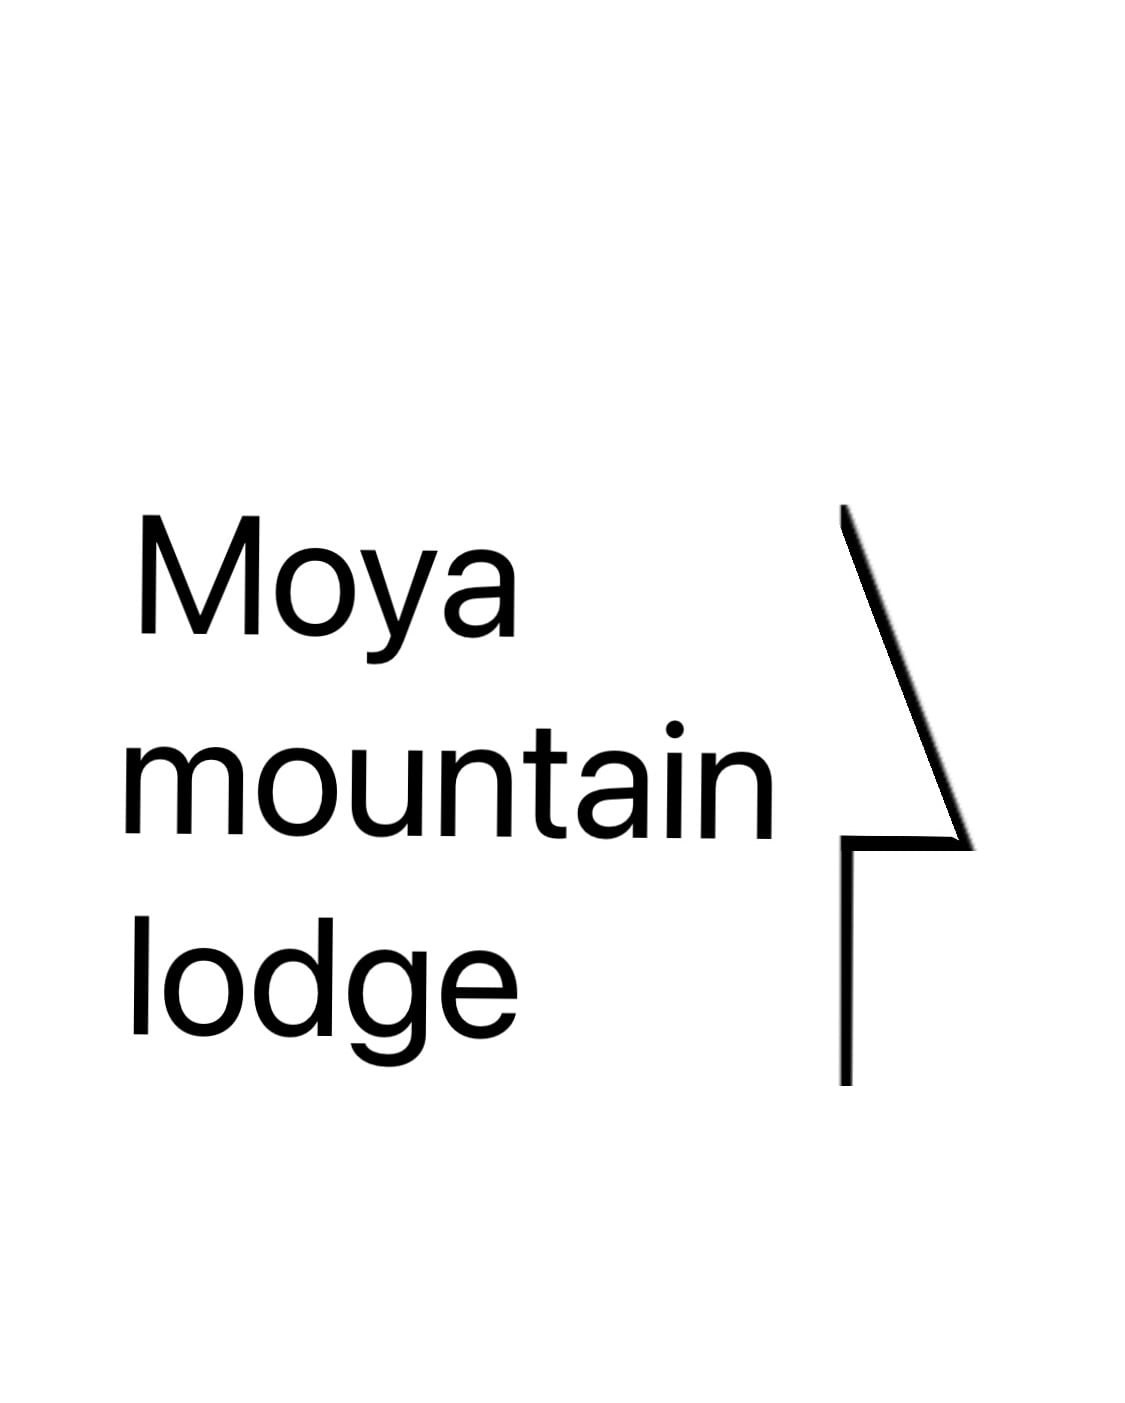 Moya mountain lodge